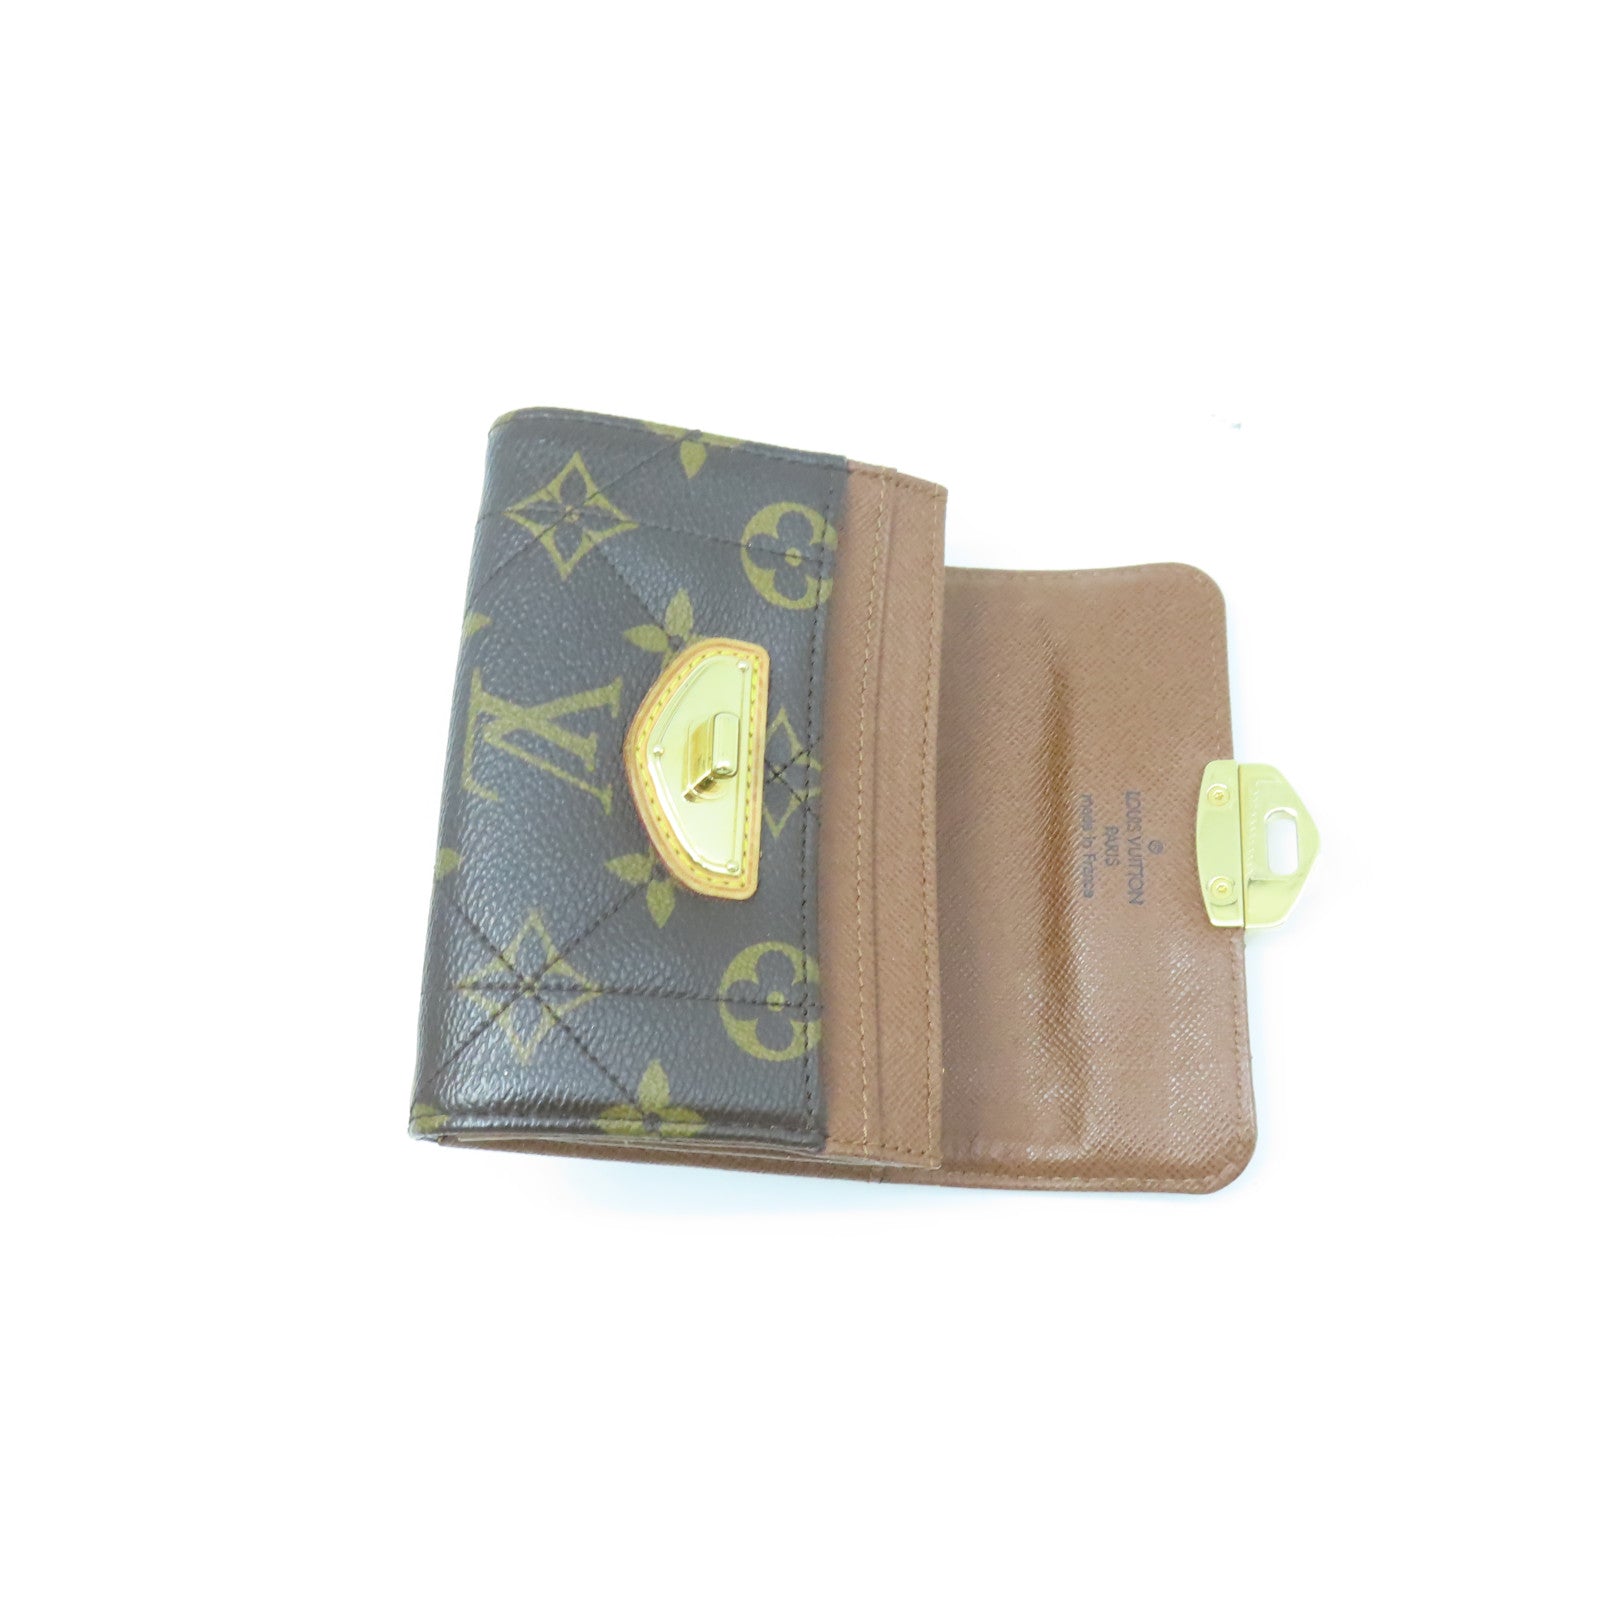 LOUIS VUITTON Monogram Etoile Portefeuille Compact Wallet Gold Buckle  Wallet Brown